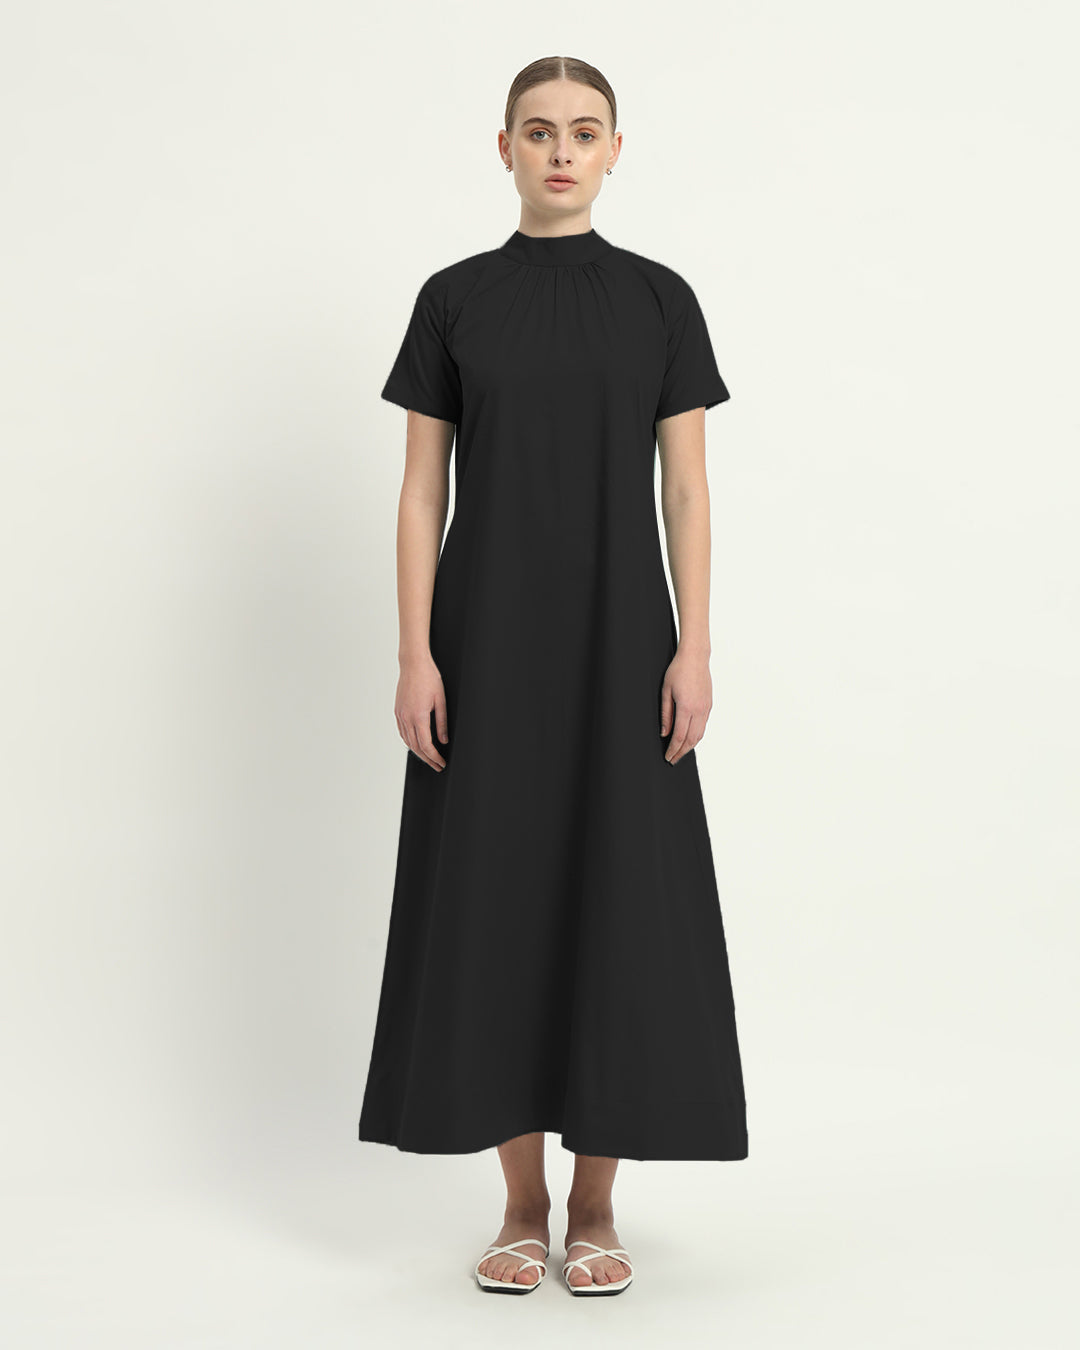 The Noir Hermon Cotton Dress